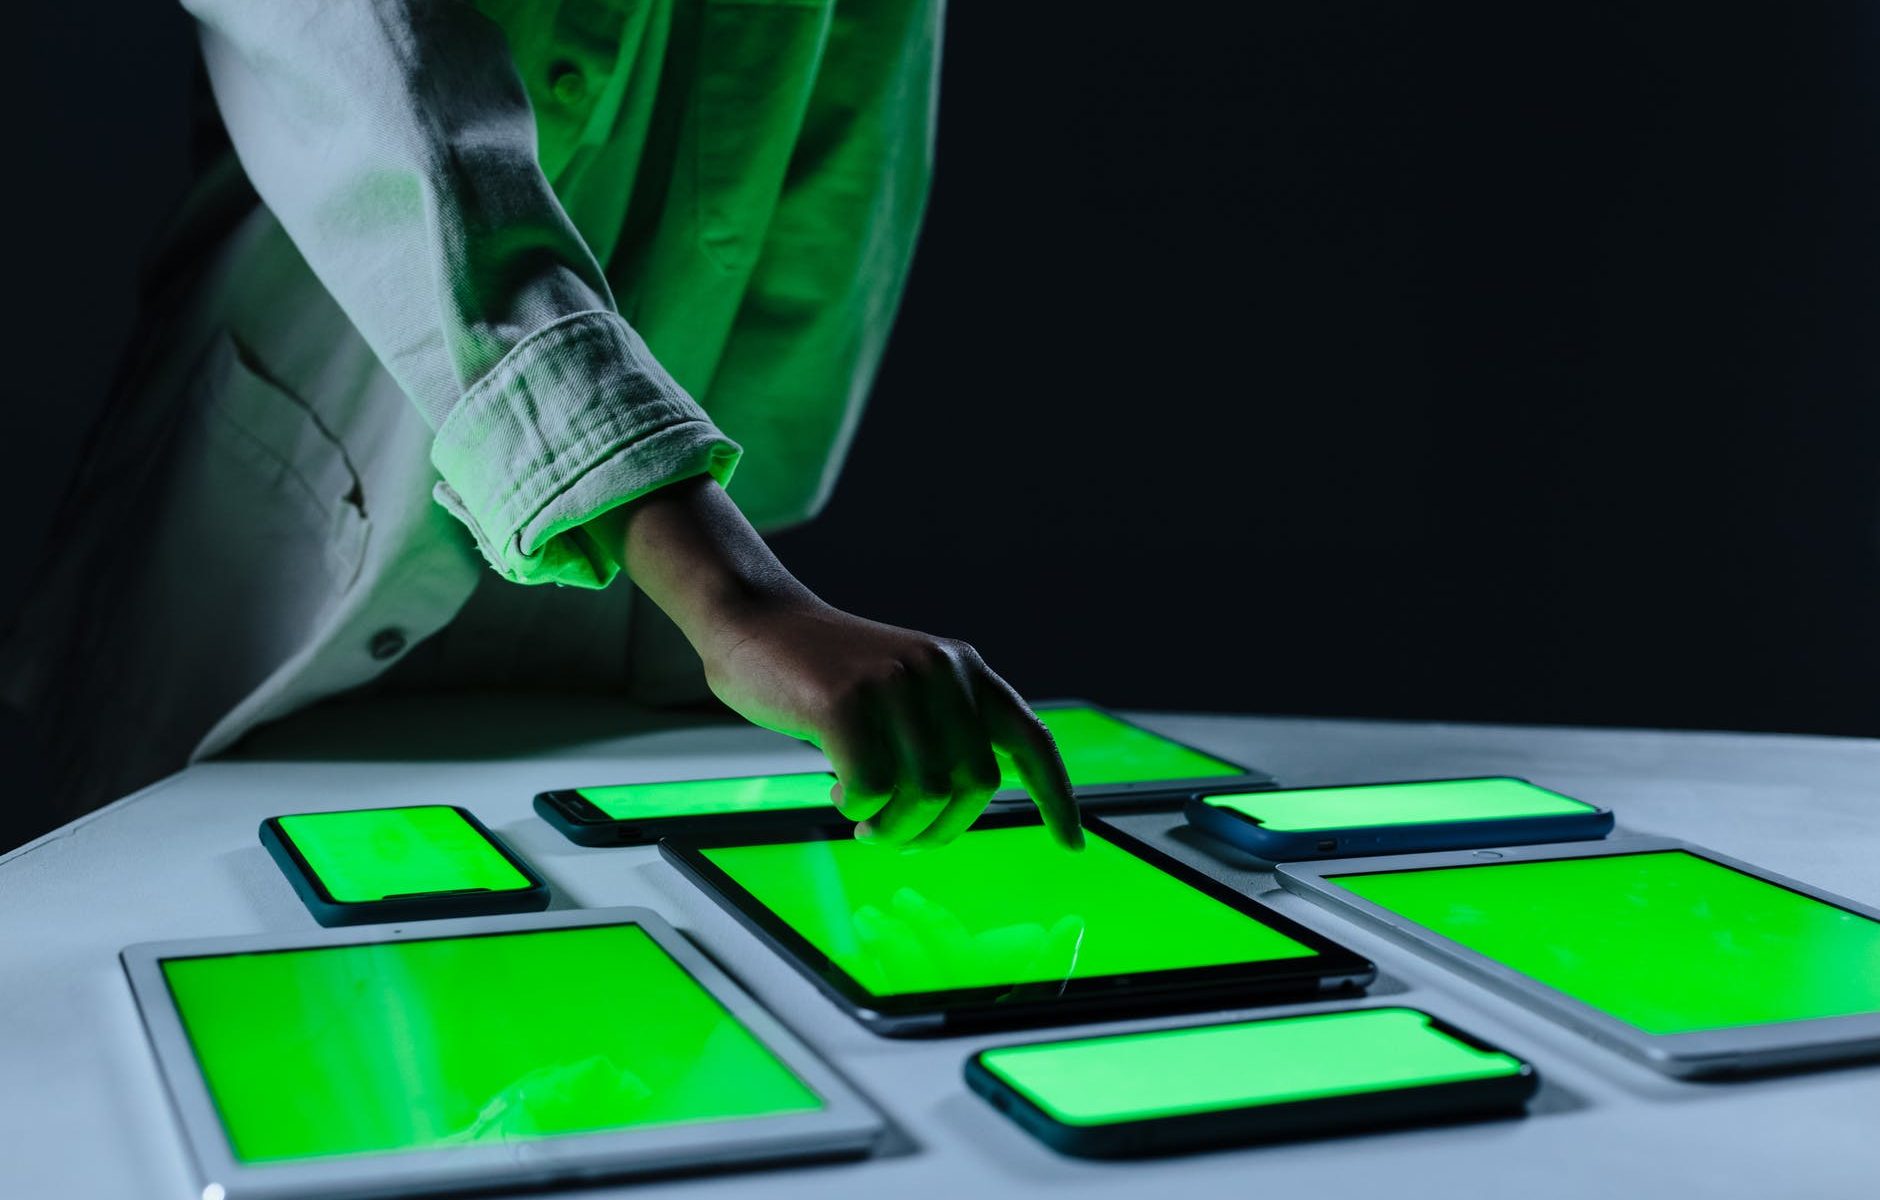 human hand touching ipad with green screen